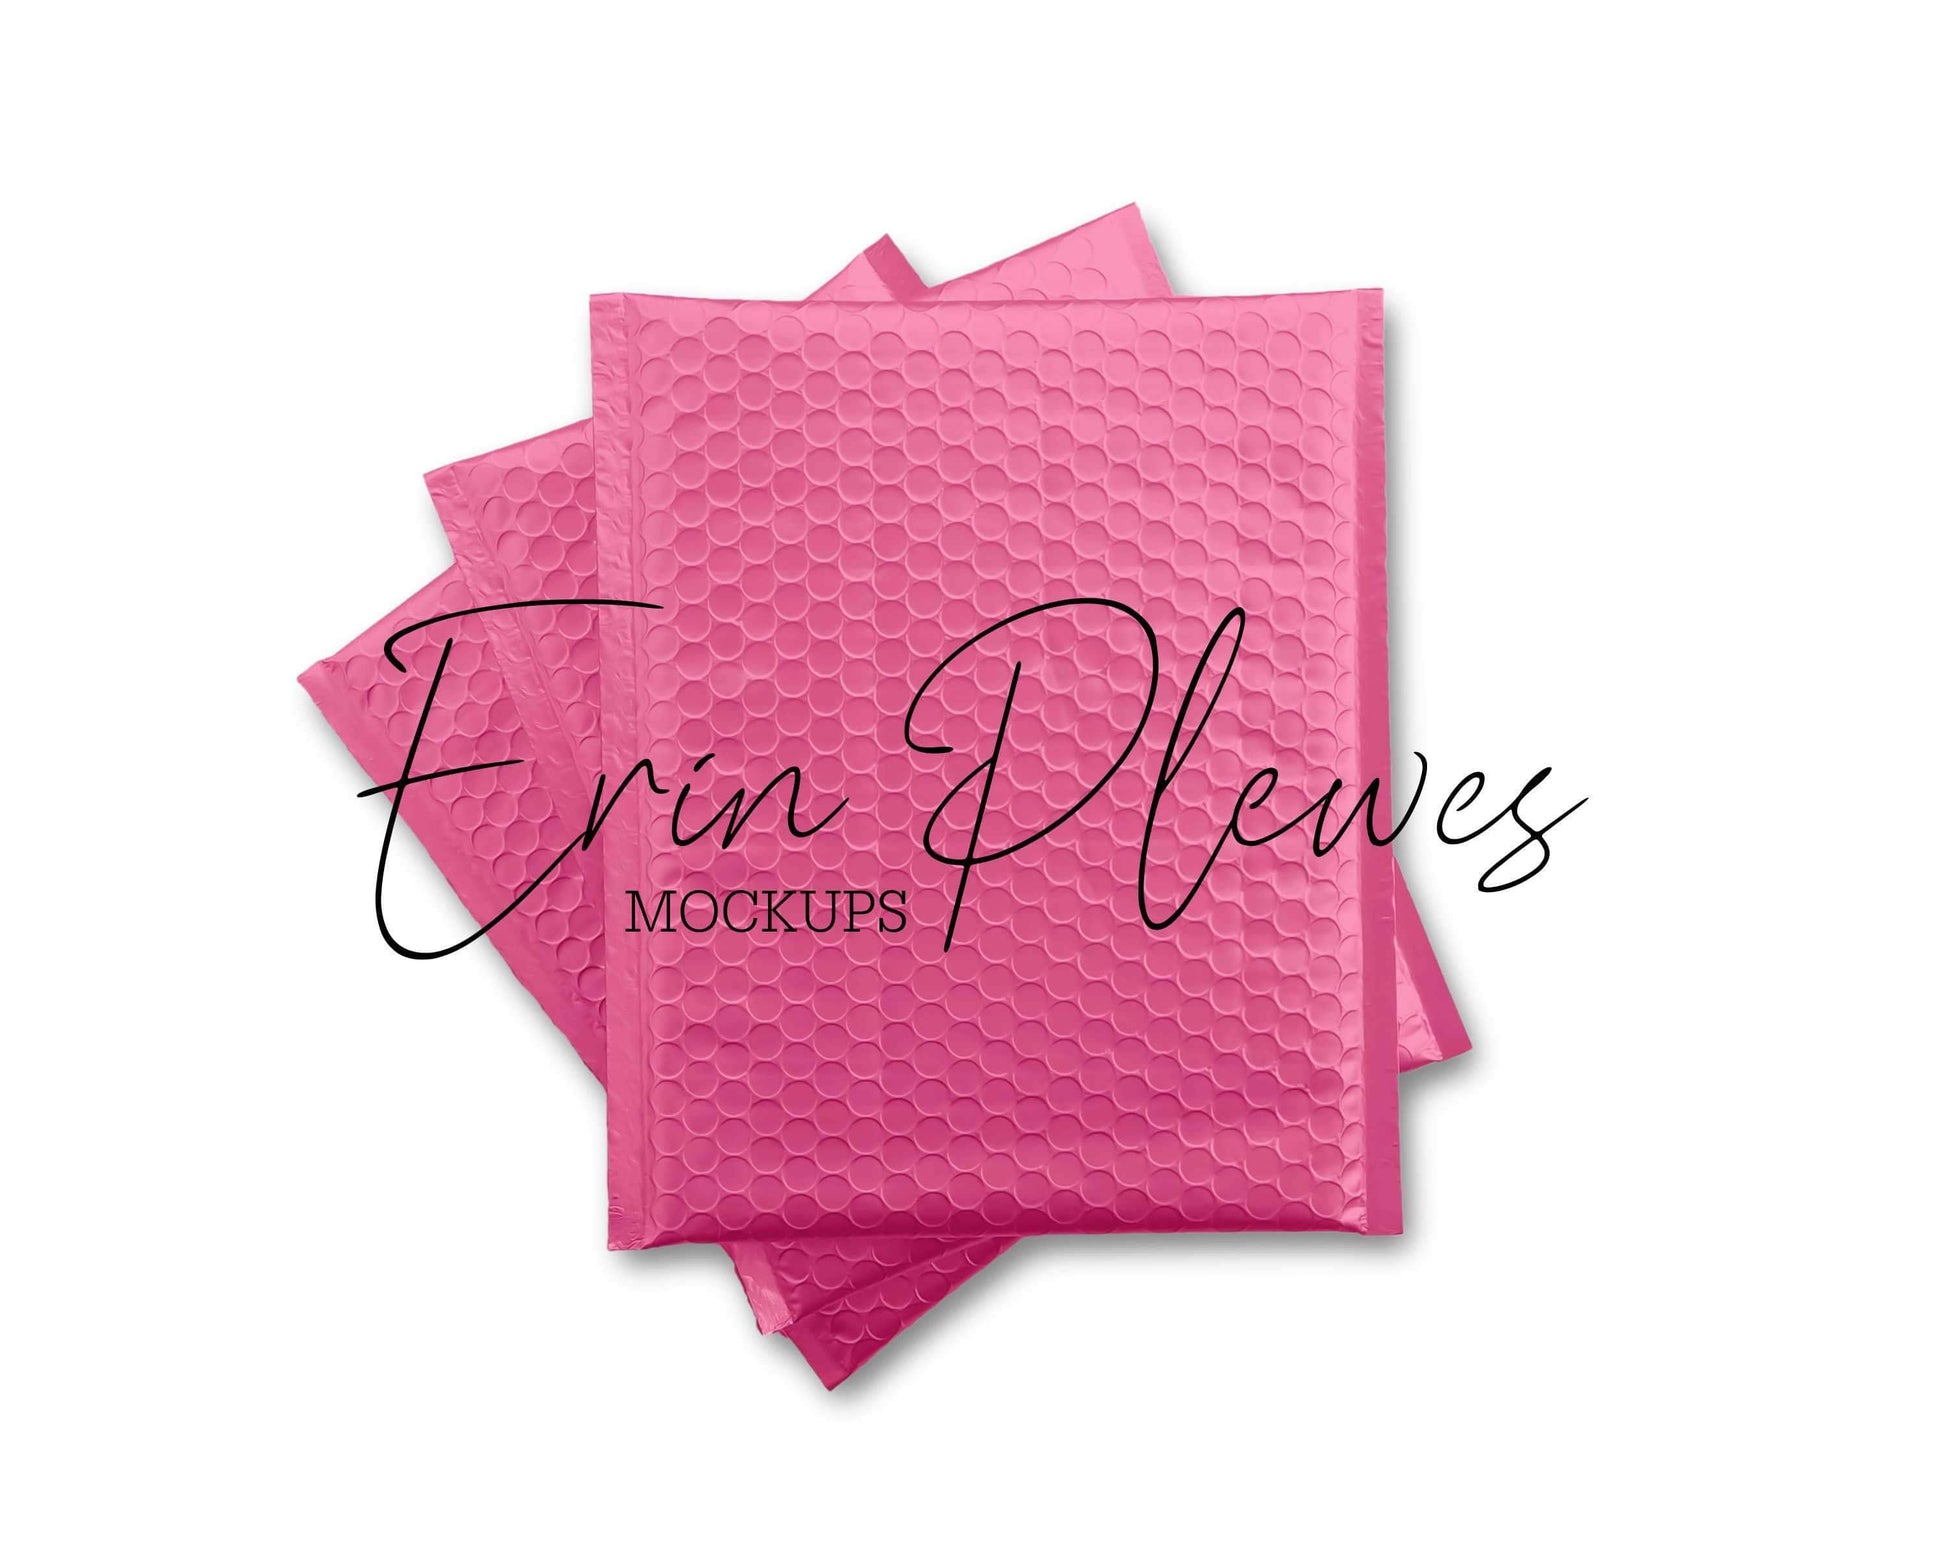 Erin Plewes Mockups Bubble Mailer Mockup Set, Pink Bag Mock Up Flat Lay, Pink Poly Mailer Stock Photo, Jpeg Instant Digital Download Template